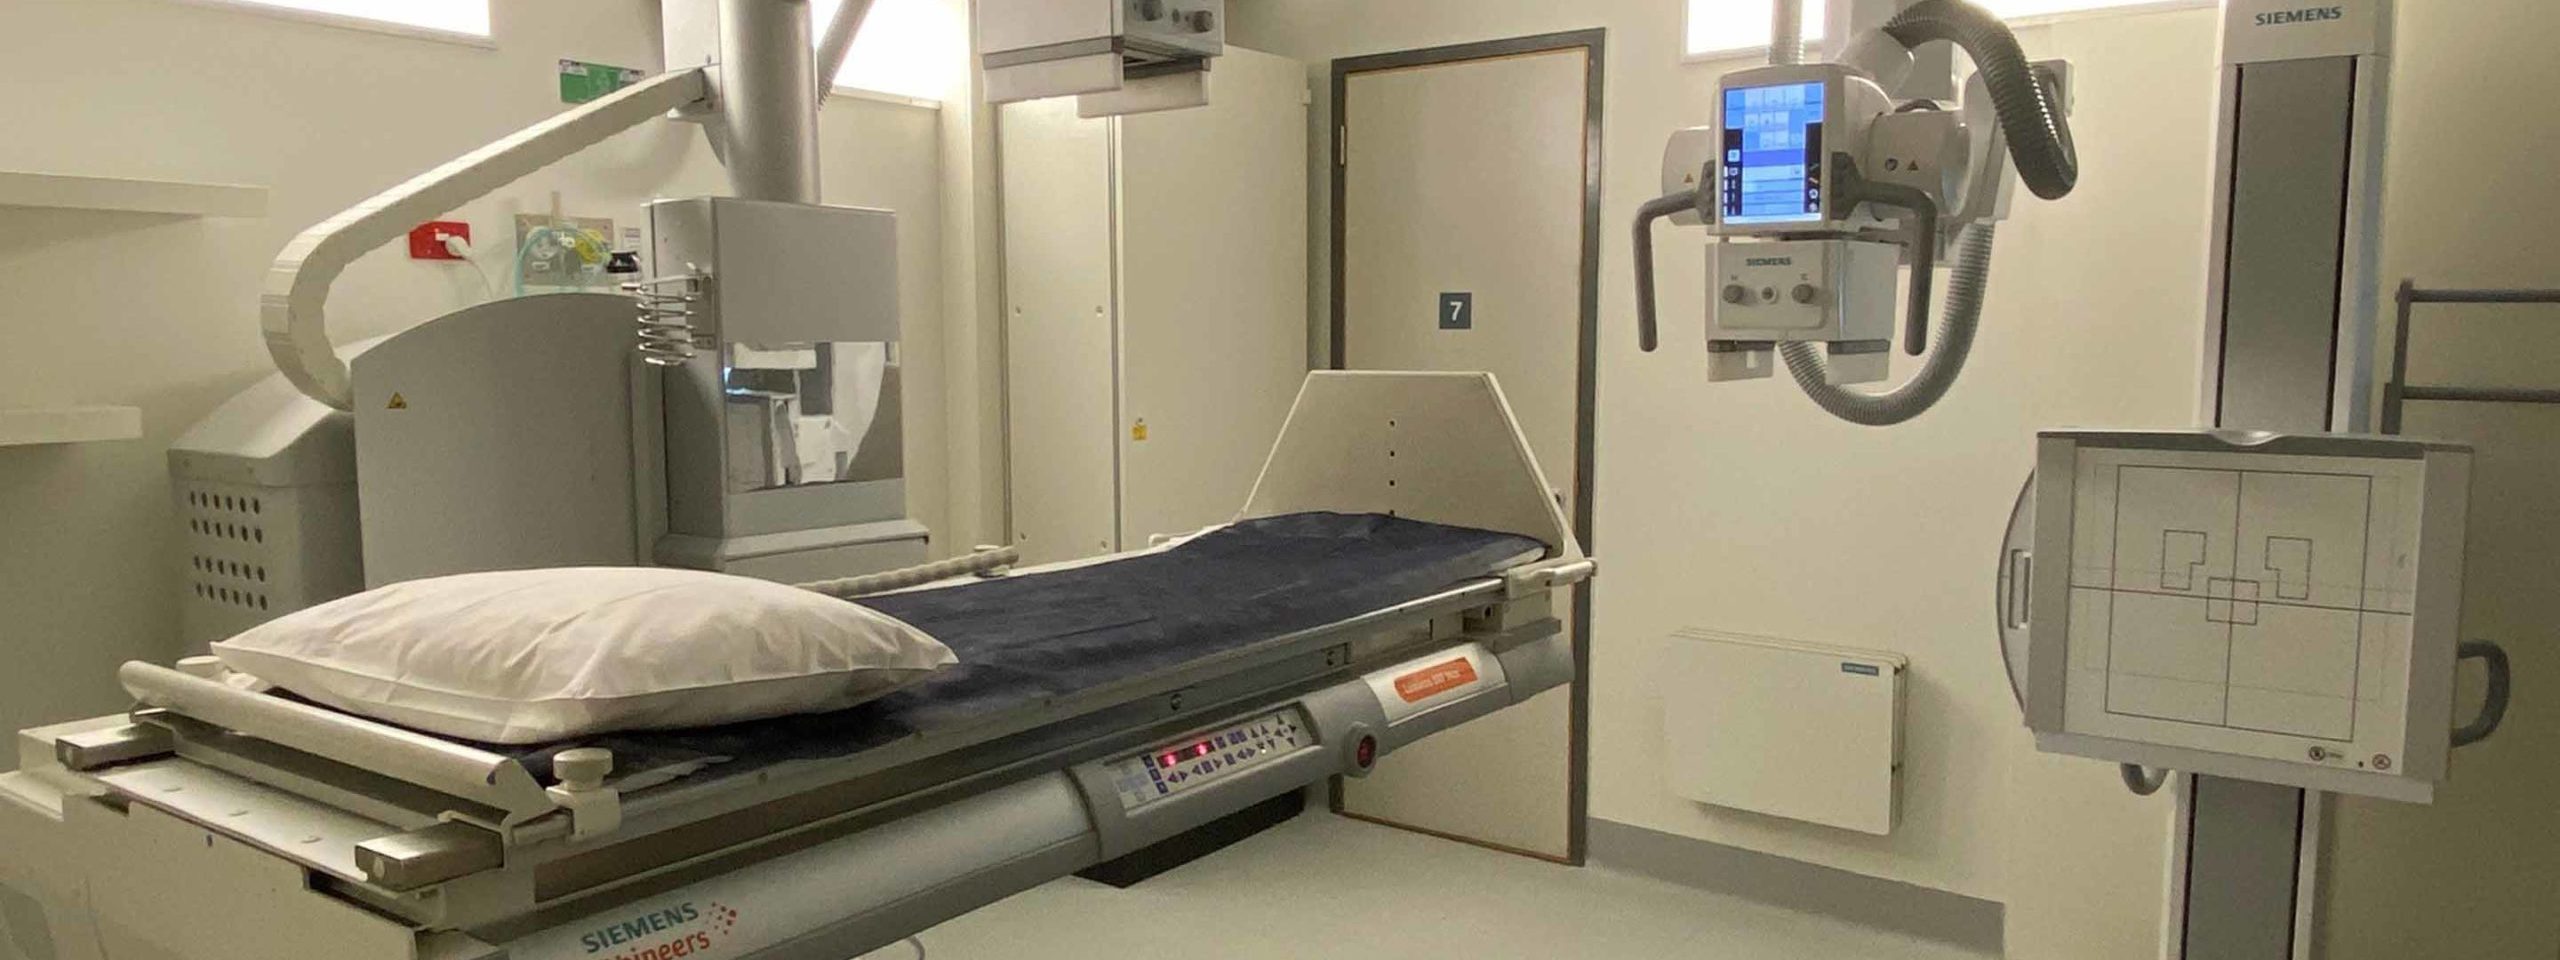 New new Fluoroscopy/X-ray equipment at St Andrew's clinic